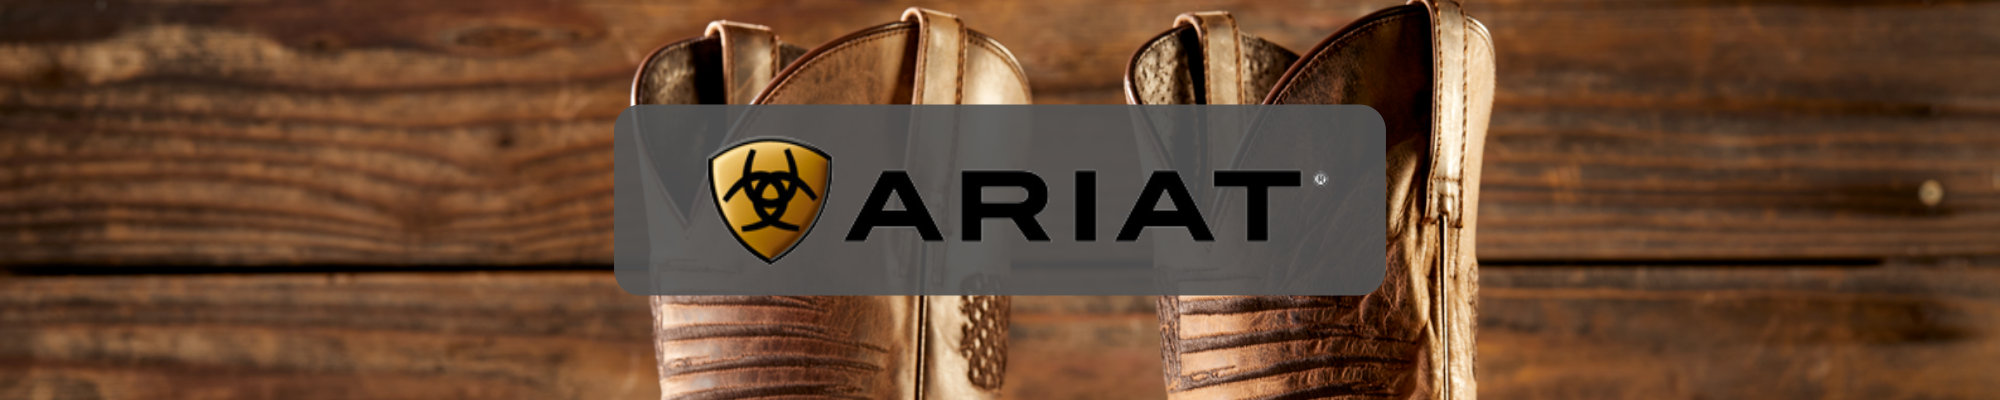 Ariat Boots Logo